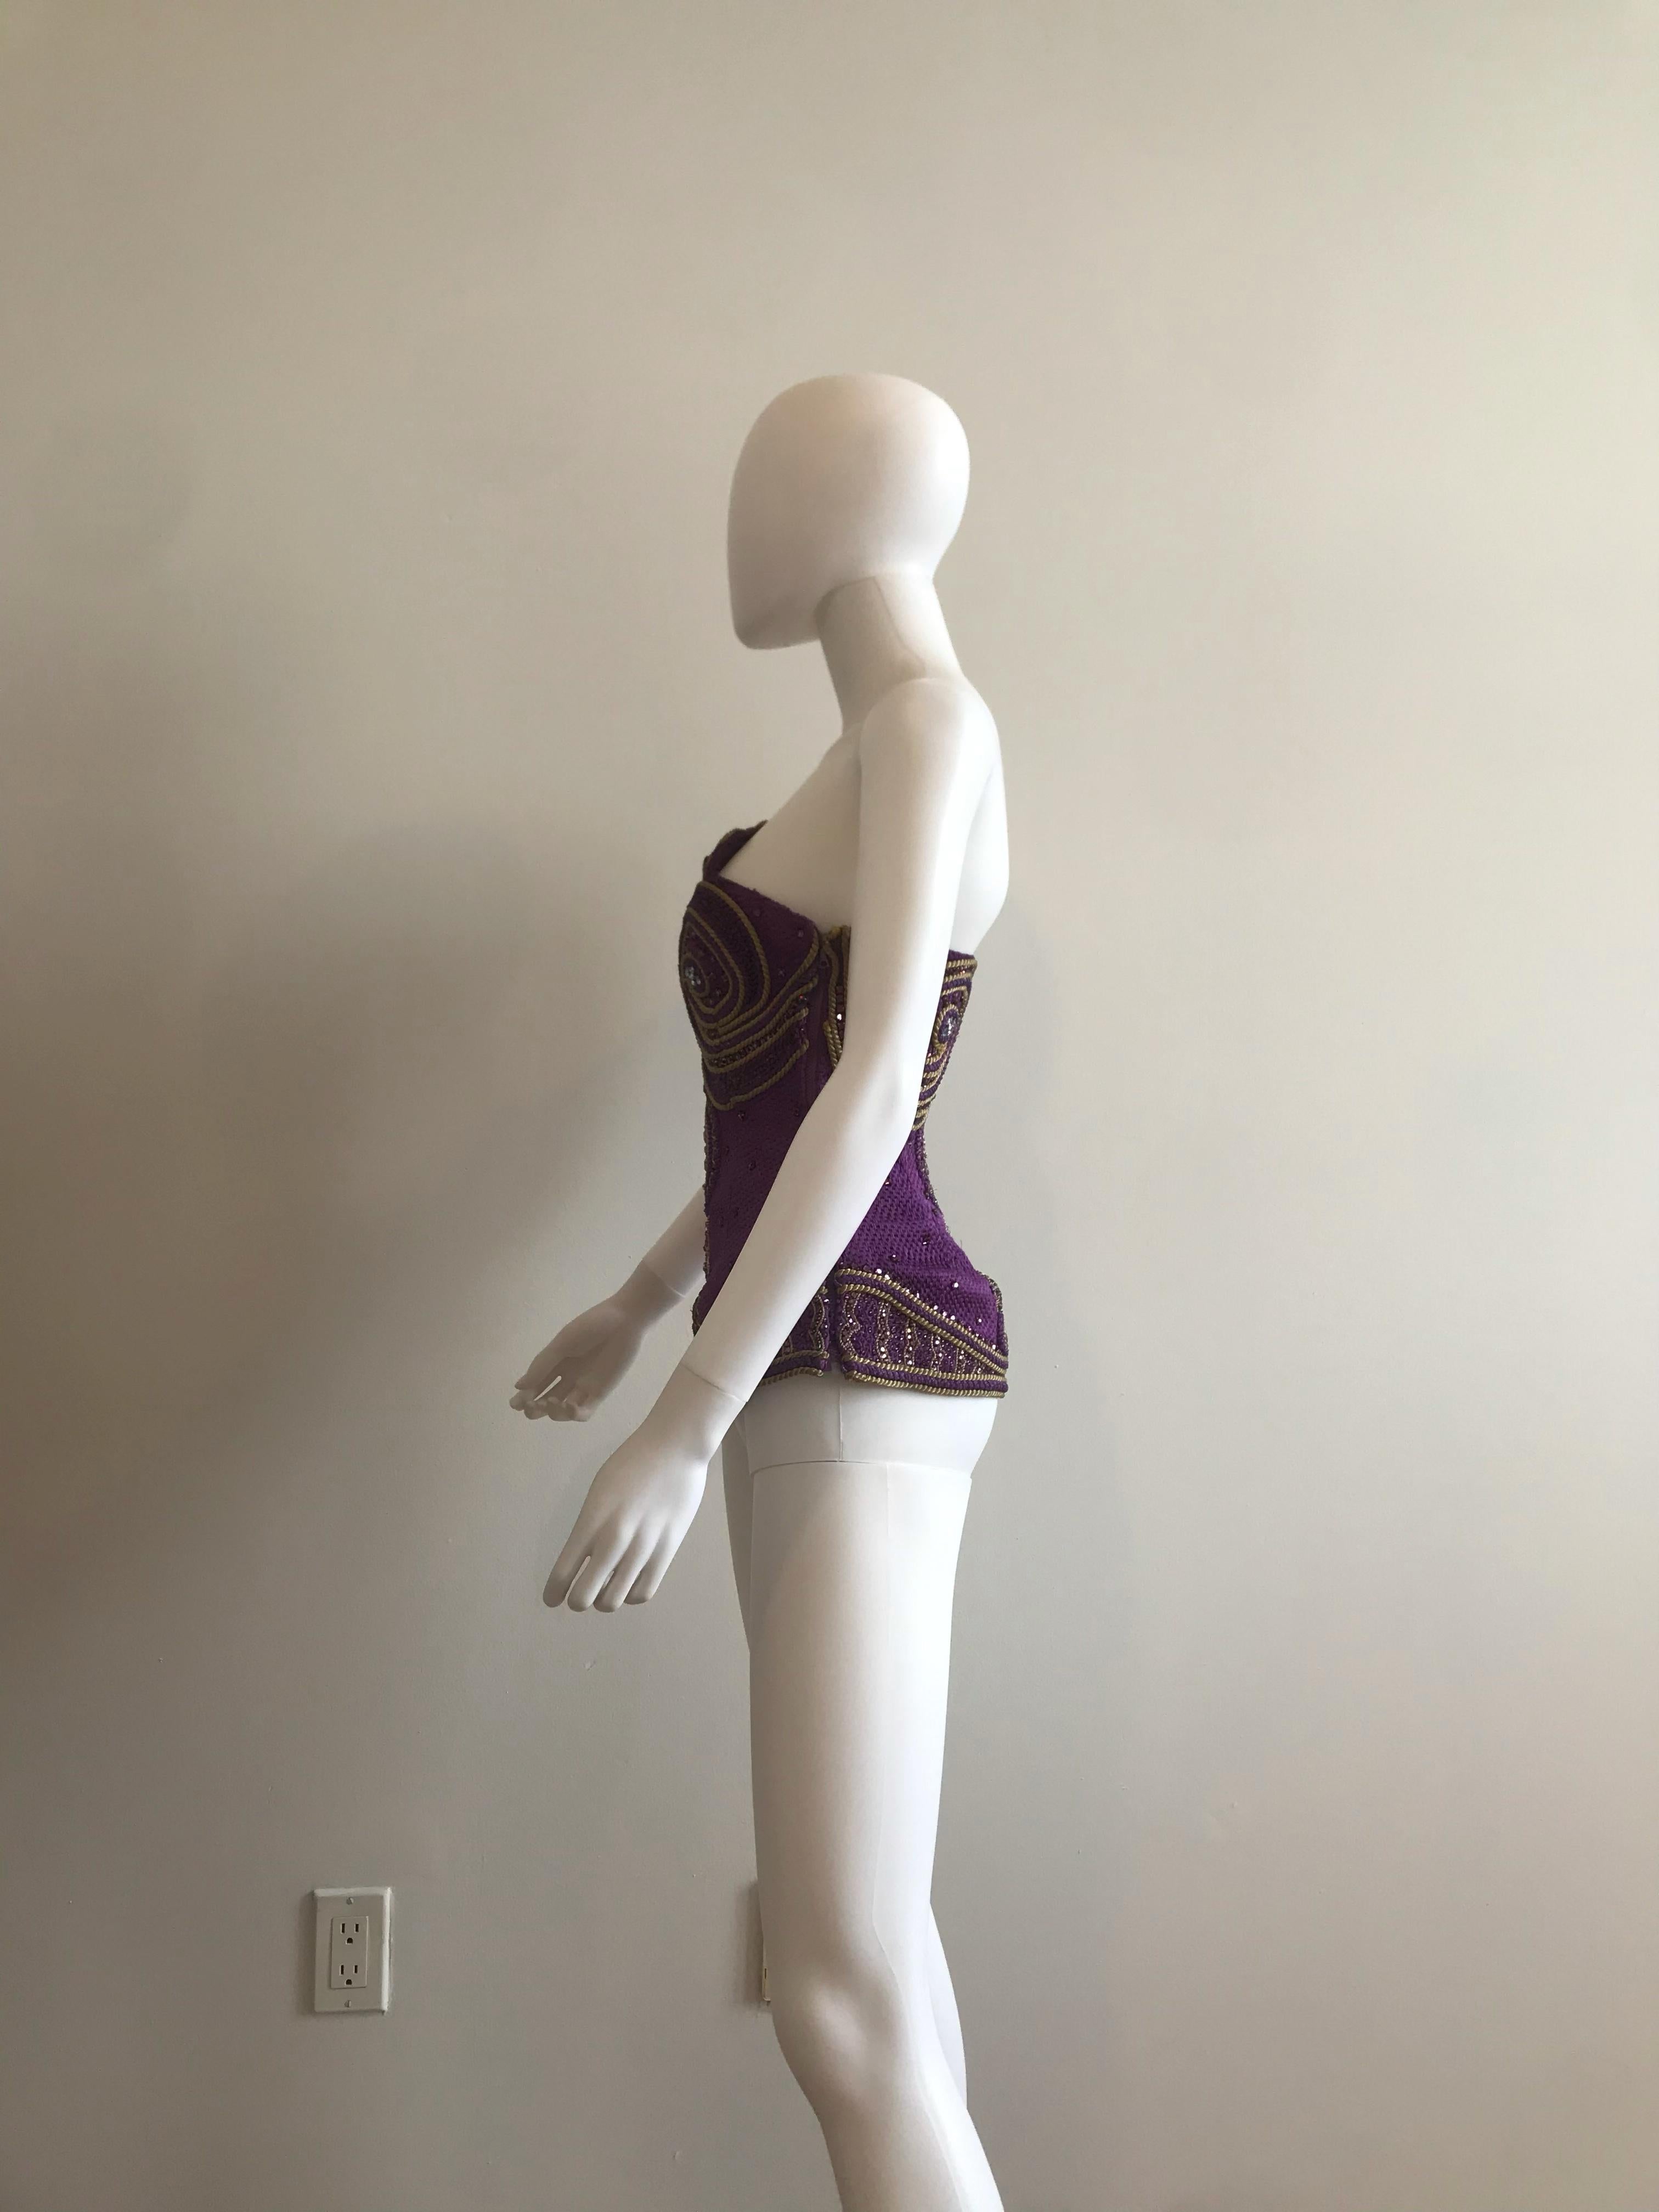 versace purple rhinestone corset top